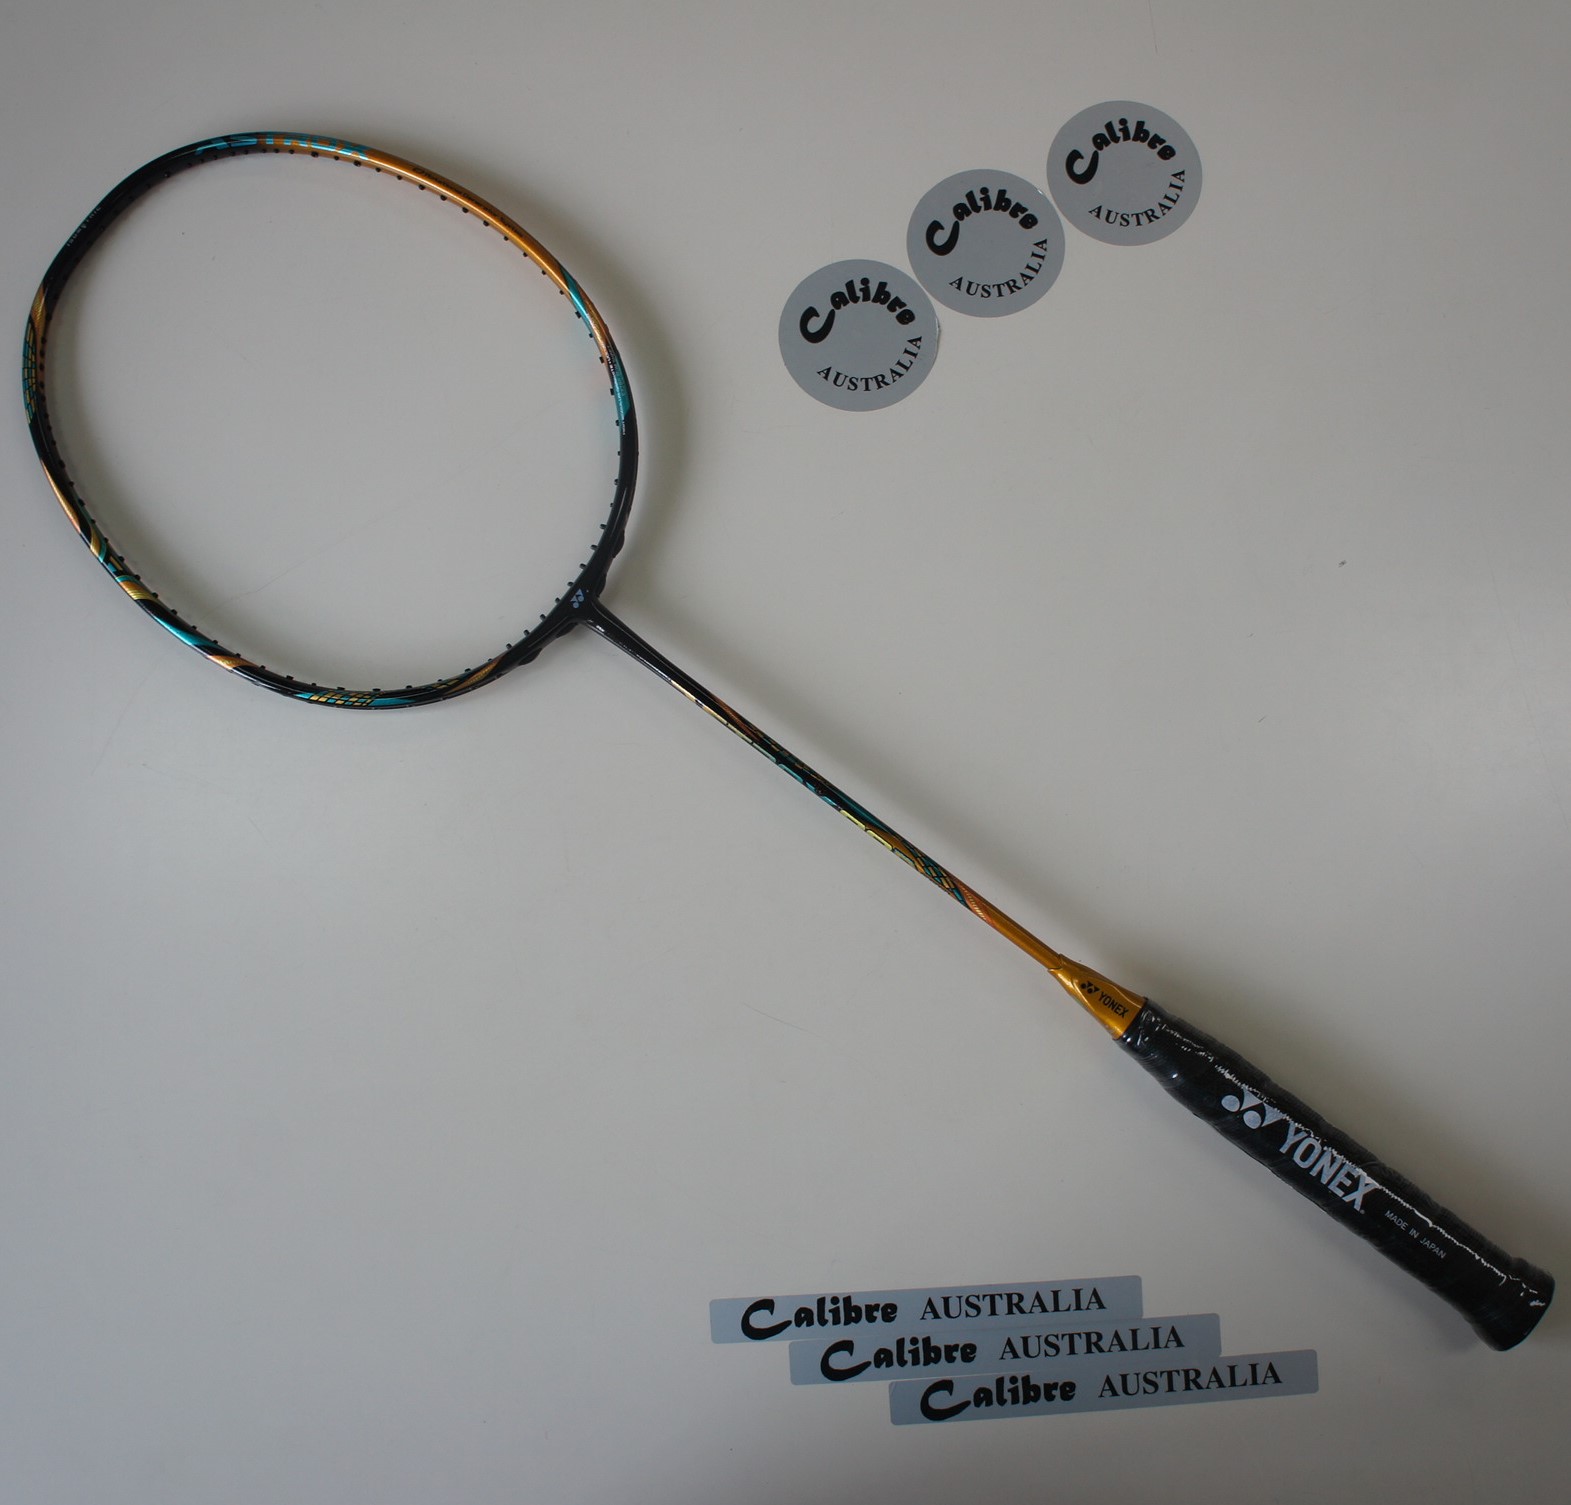 2021 YONEX Astrox 88D Pro Badminton Racquet 3UG5, AX88D Pro, Unstrung